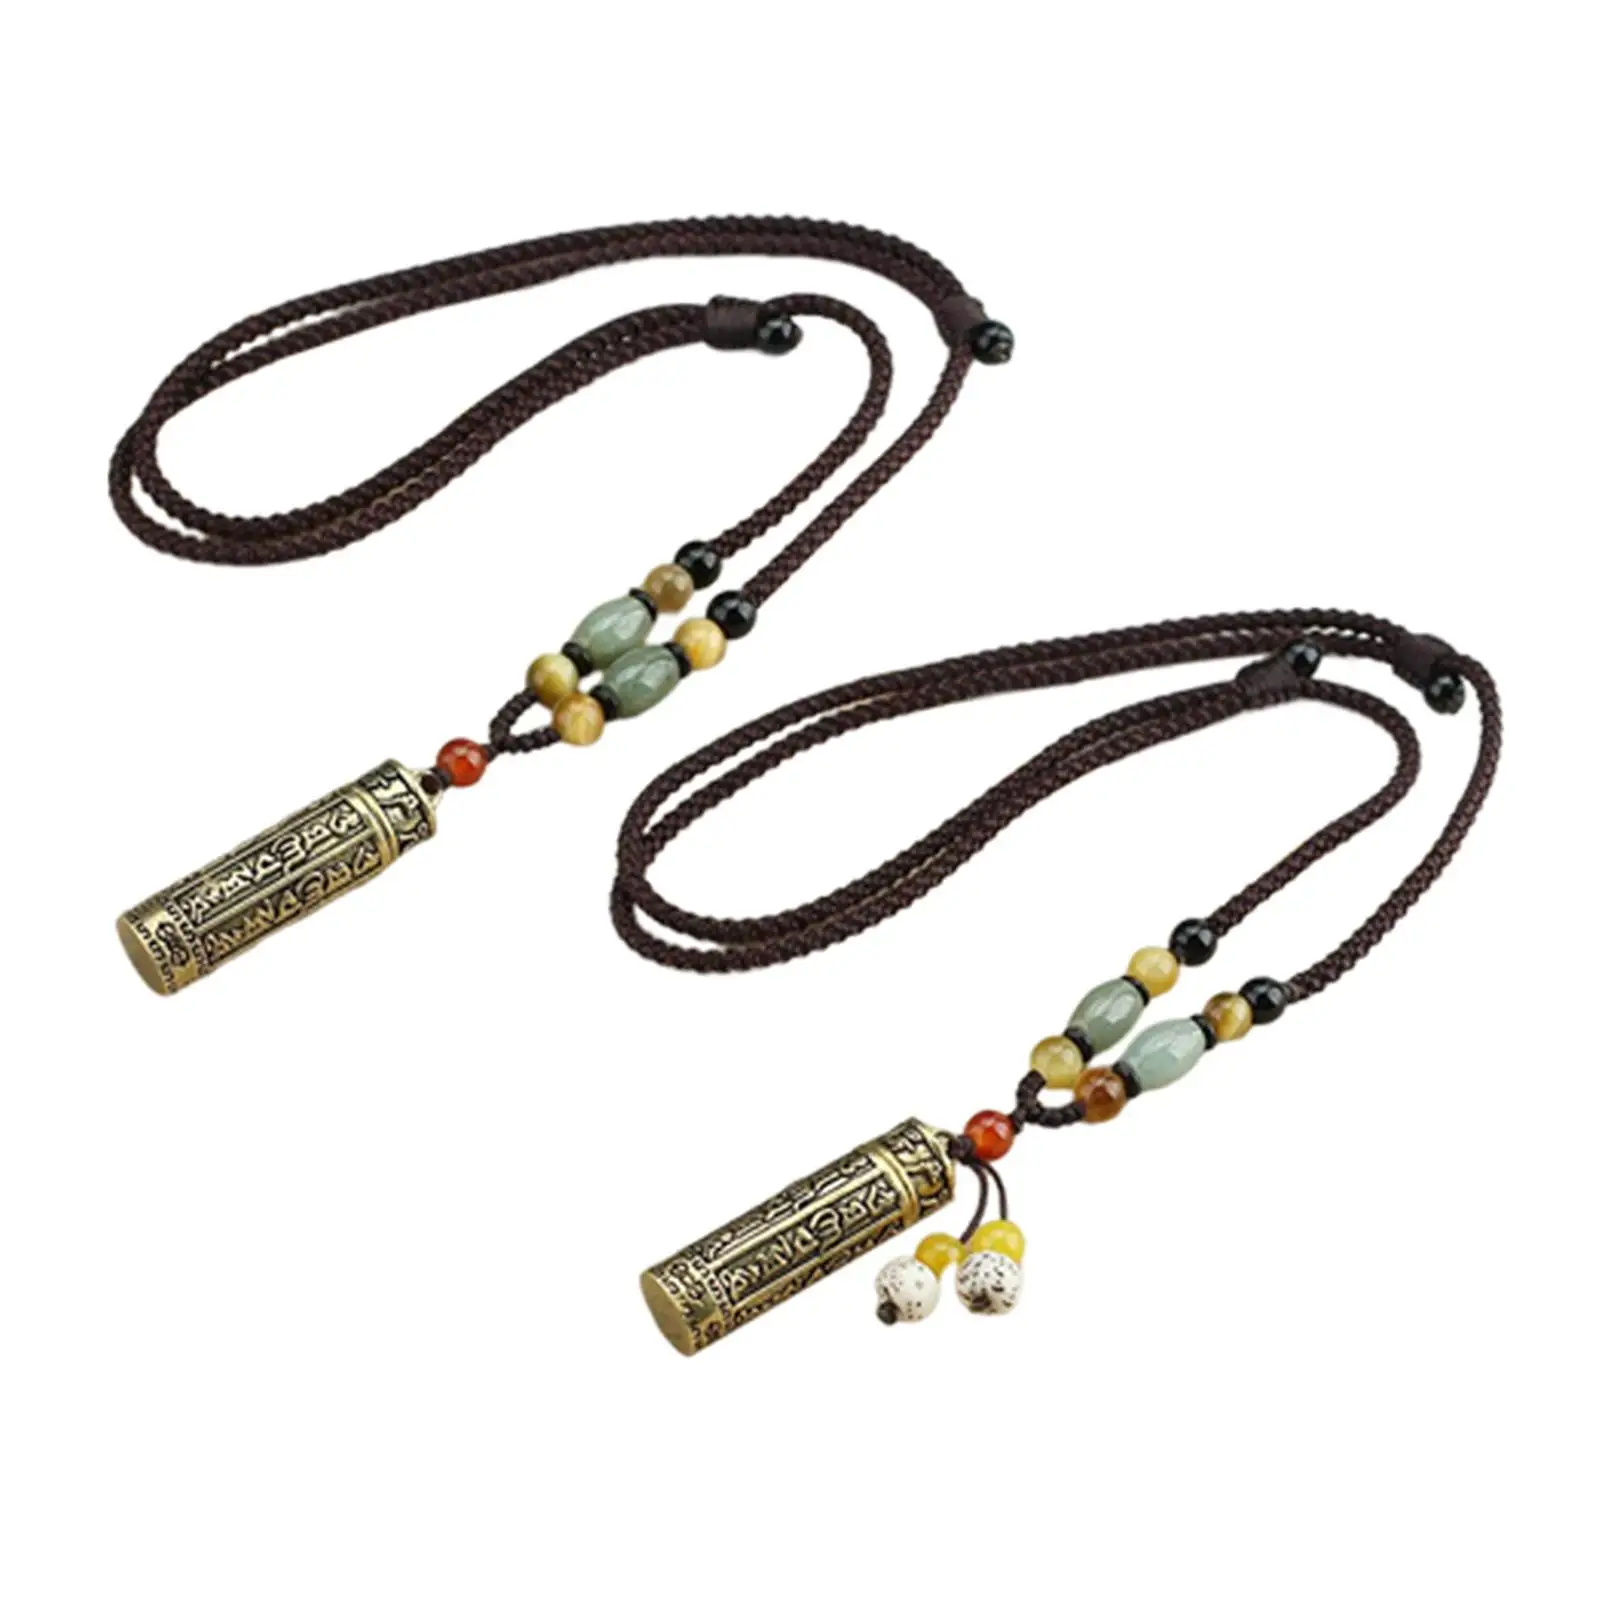 Tibetan Gawu Box Pendant Necklace Prayer Collection Buddhist Praying Accs Amulet Religious Jewelry Buddhist Amulet Necklace